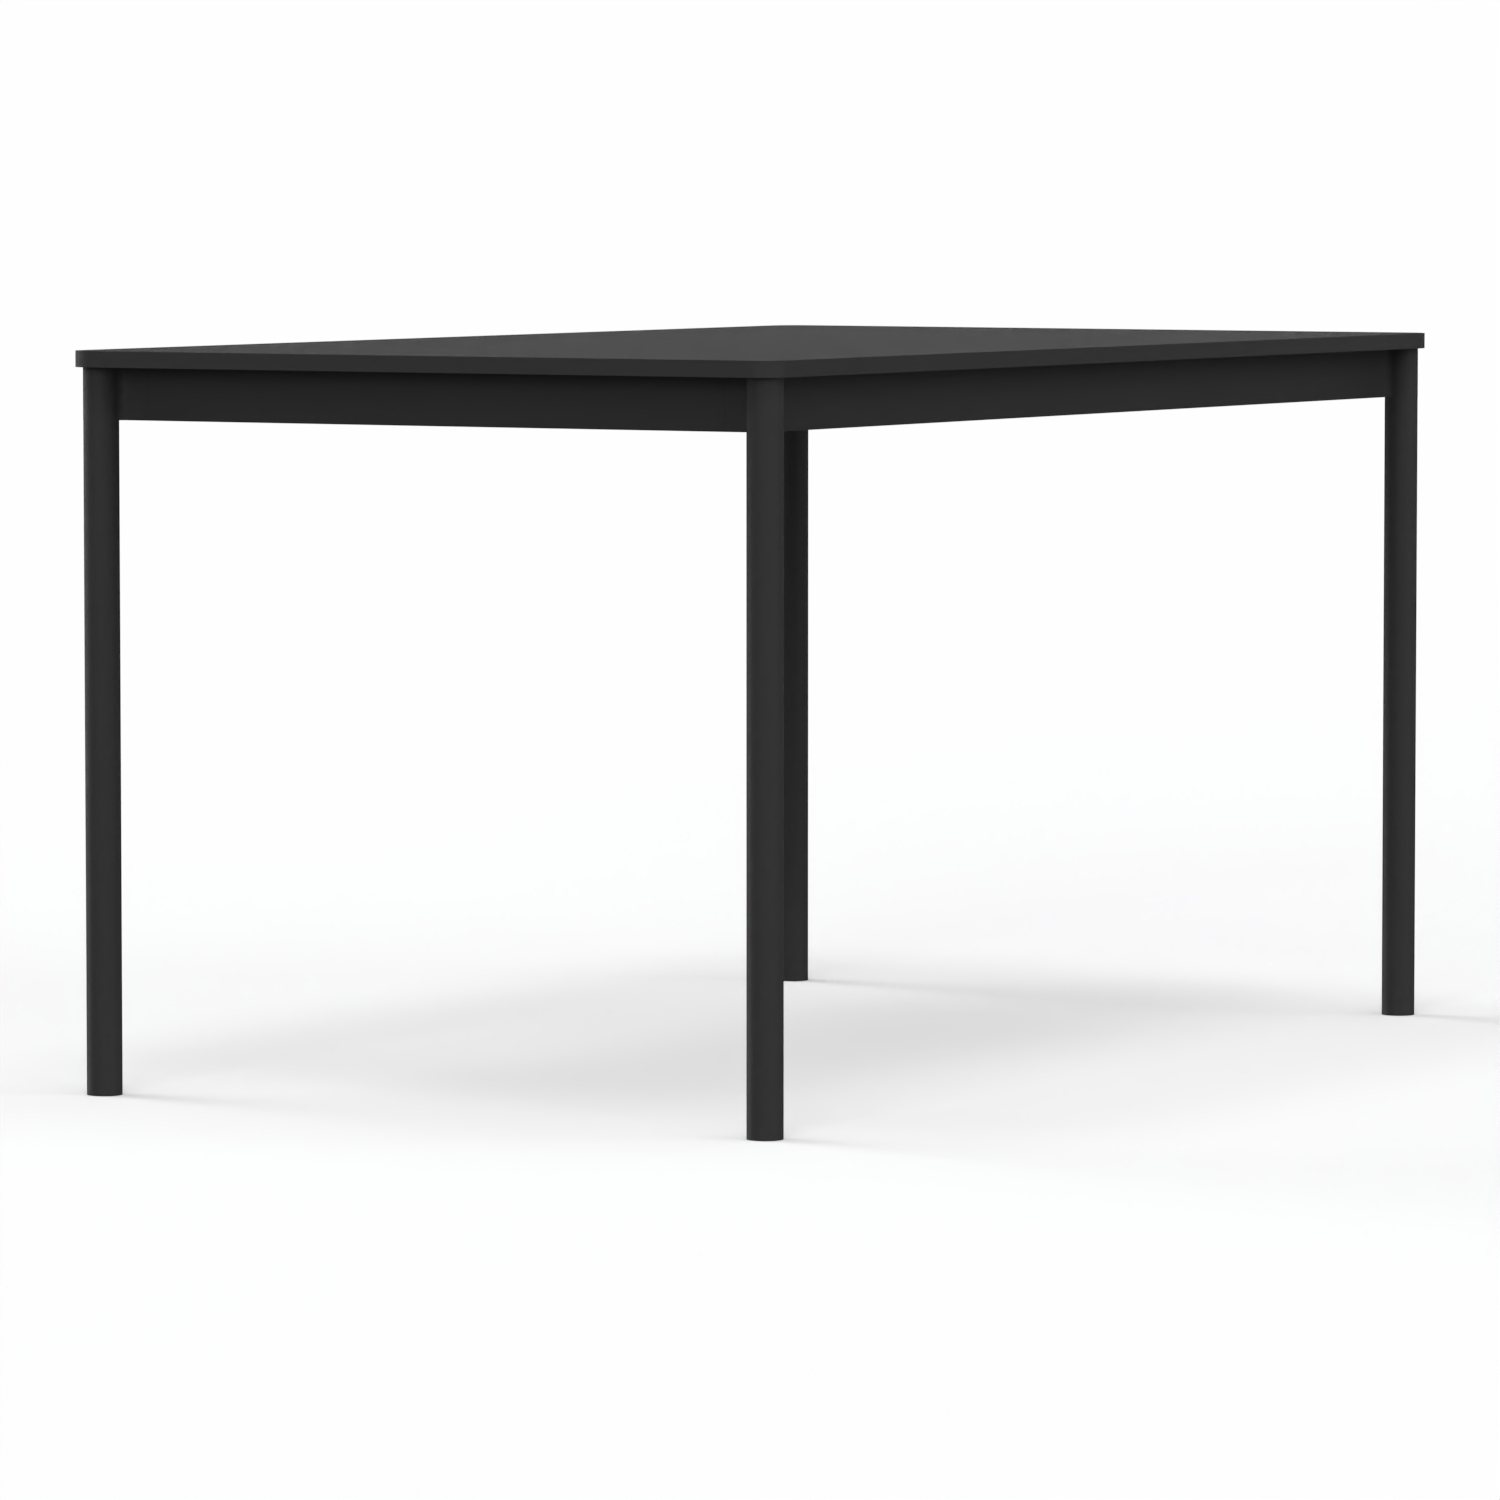 Base Table / 140 x 80 cm 63984